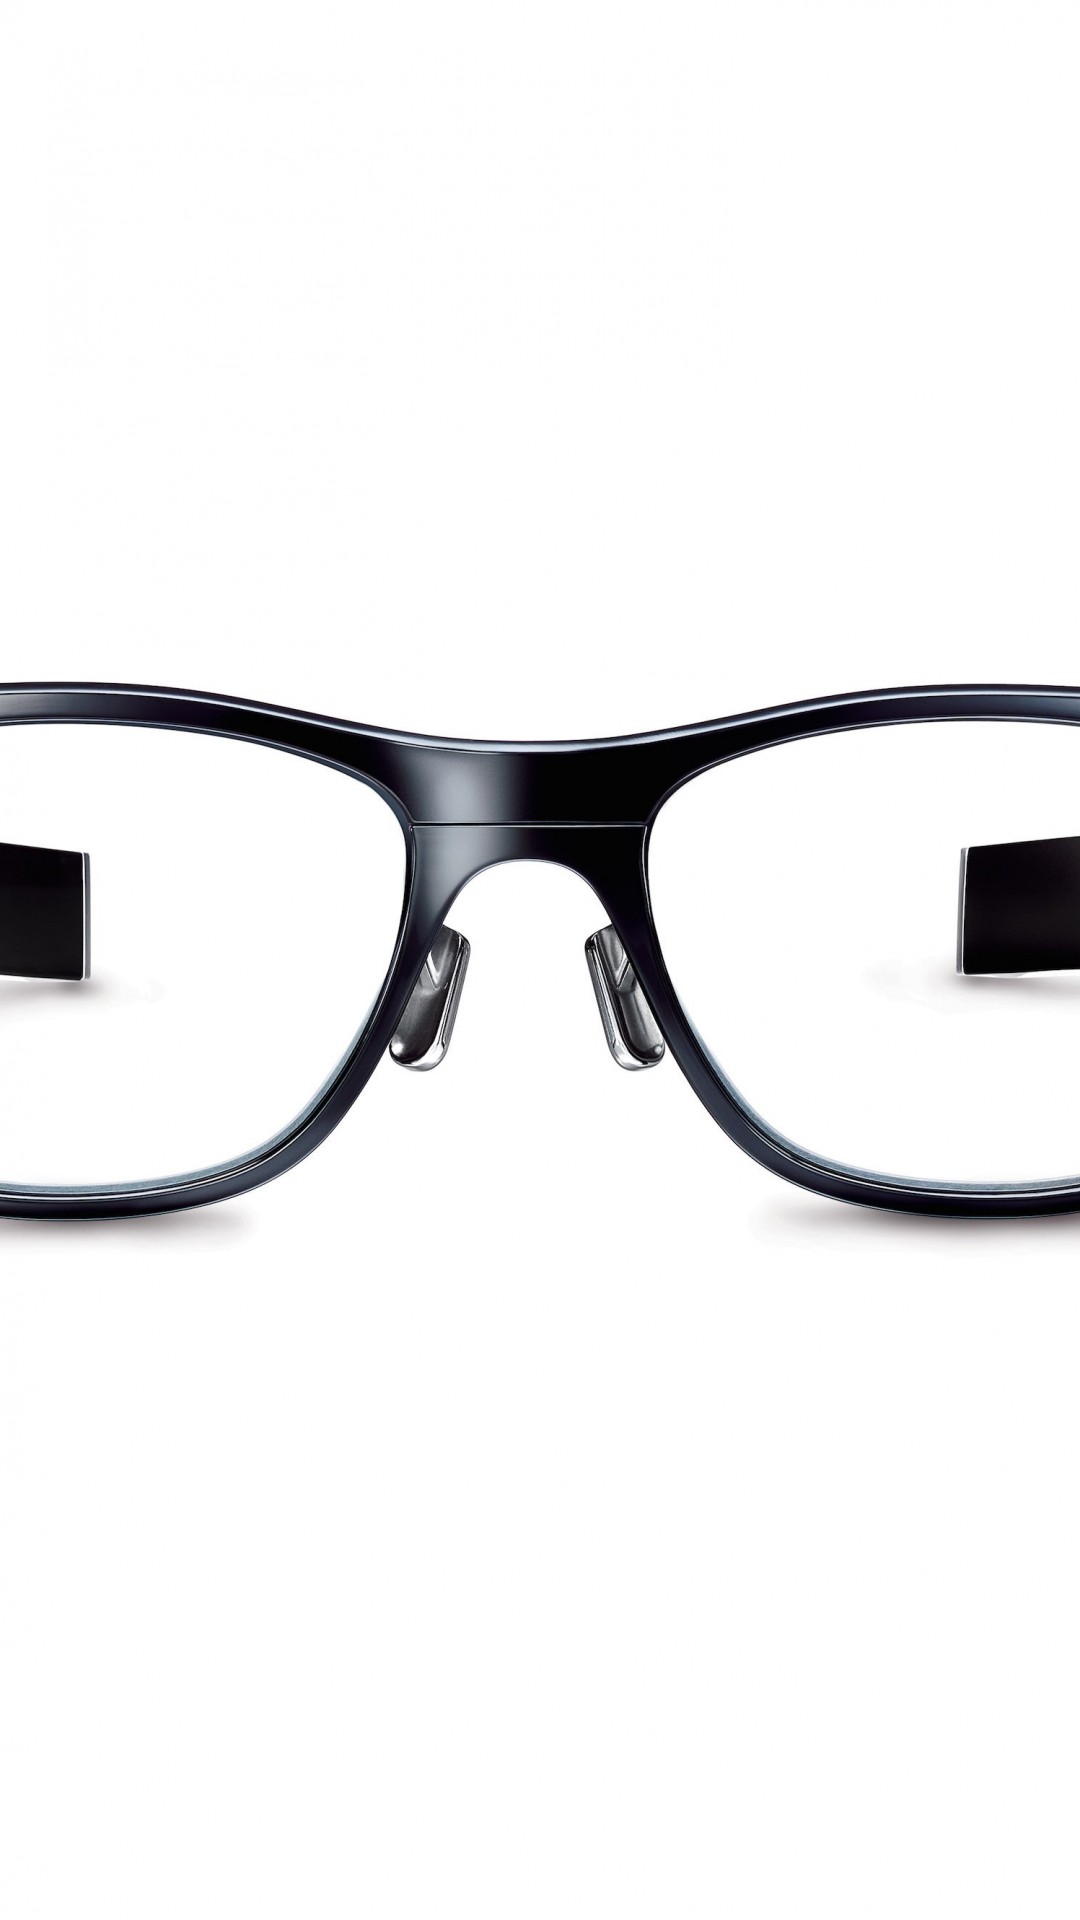 Jins Meme Smart Glasses Wallpaper for SAMSUNG Galaxy Note 3